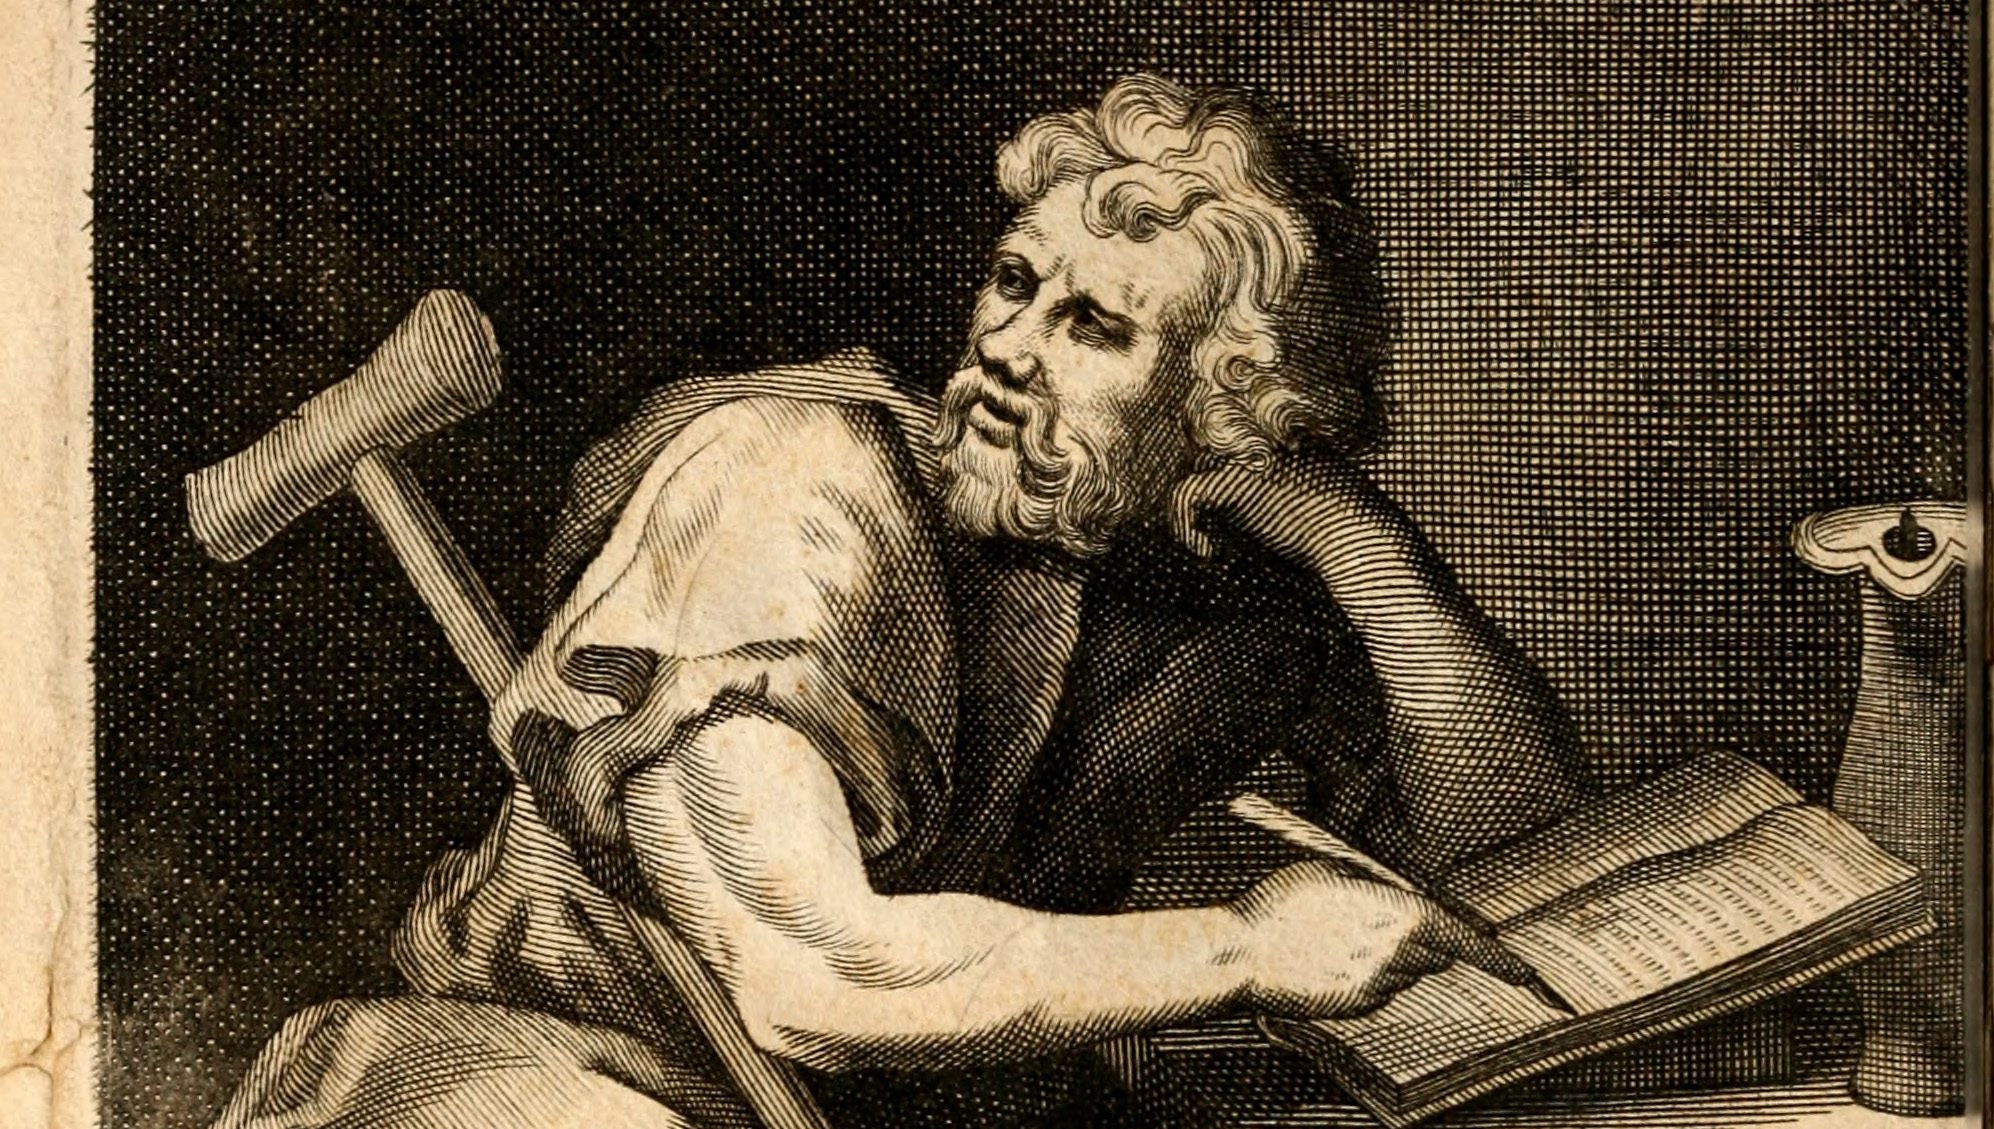 An imaginary portrait of the Stoic philosopher Epictetus